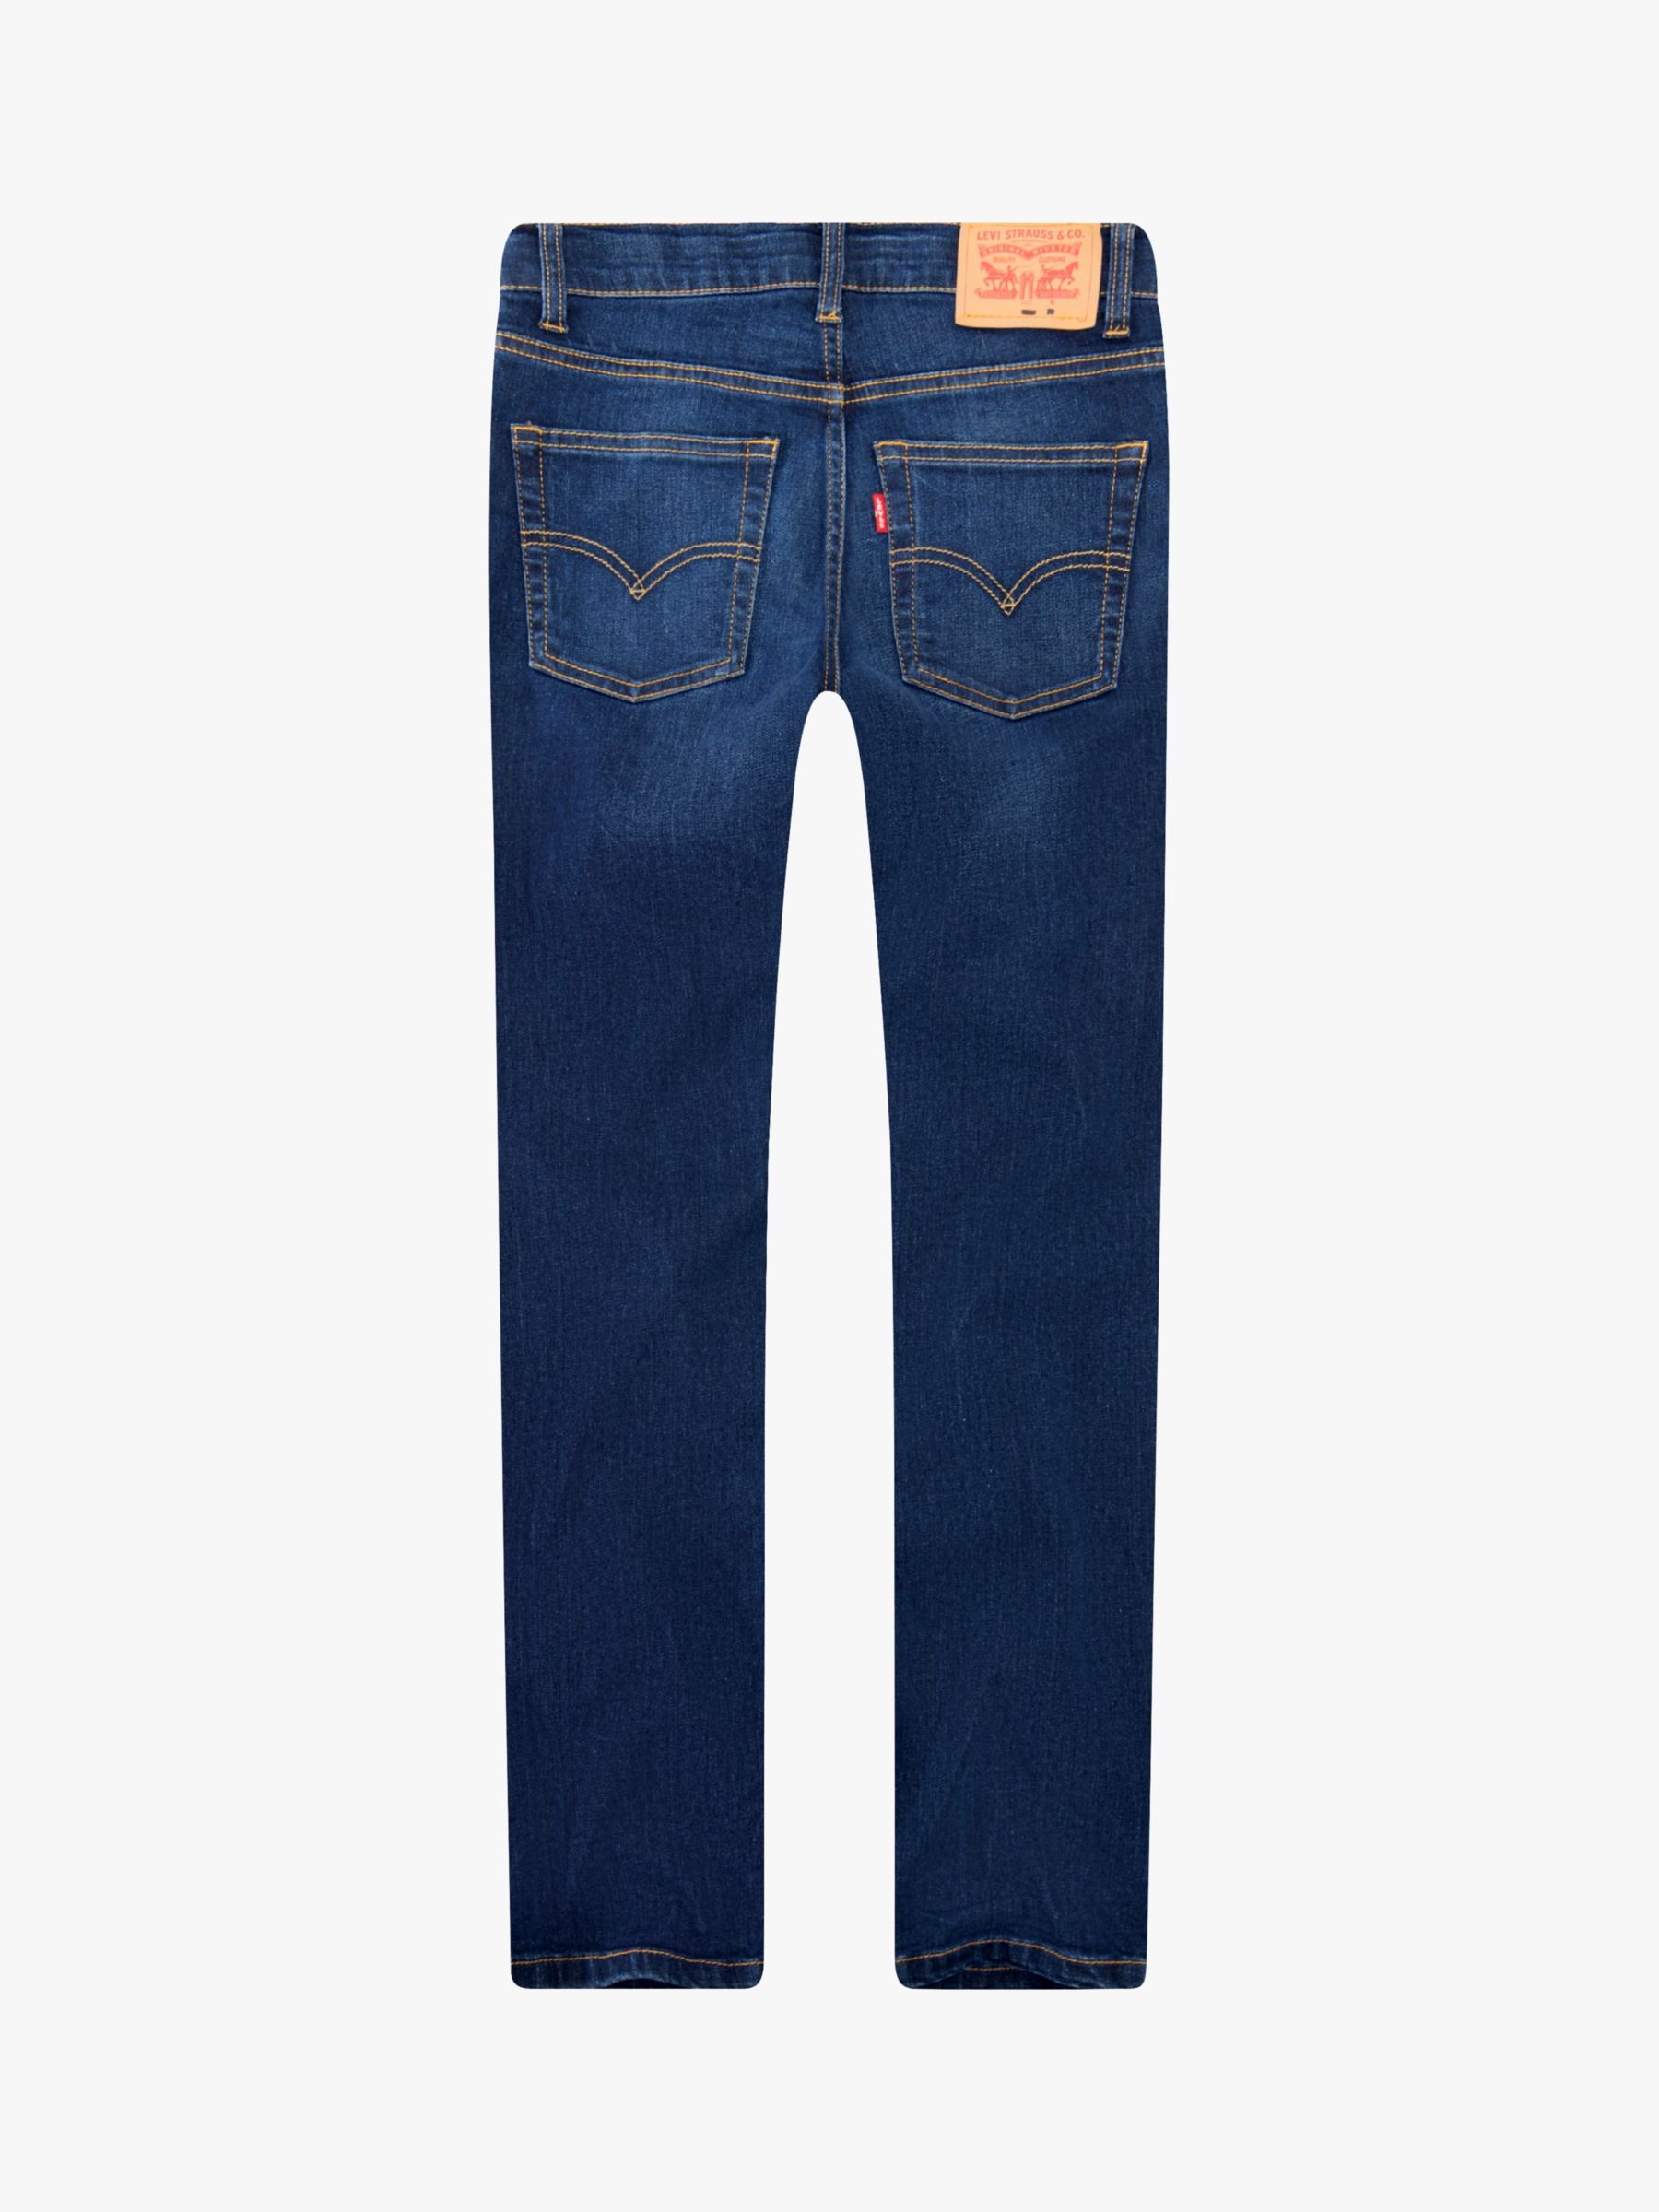 Levi's Boys' 510 Skinny Fit Jeans, Dark Blue, 8 years